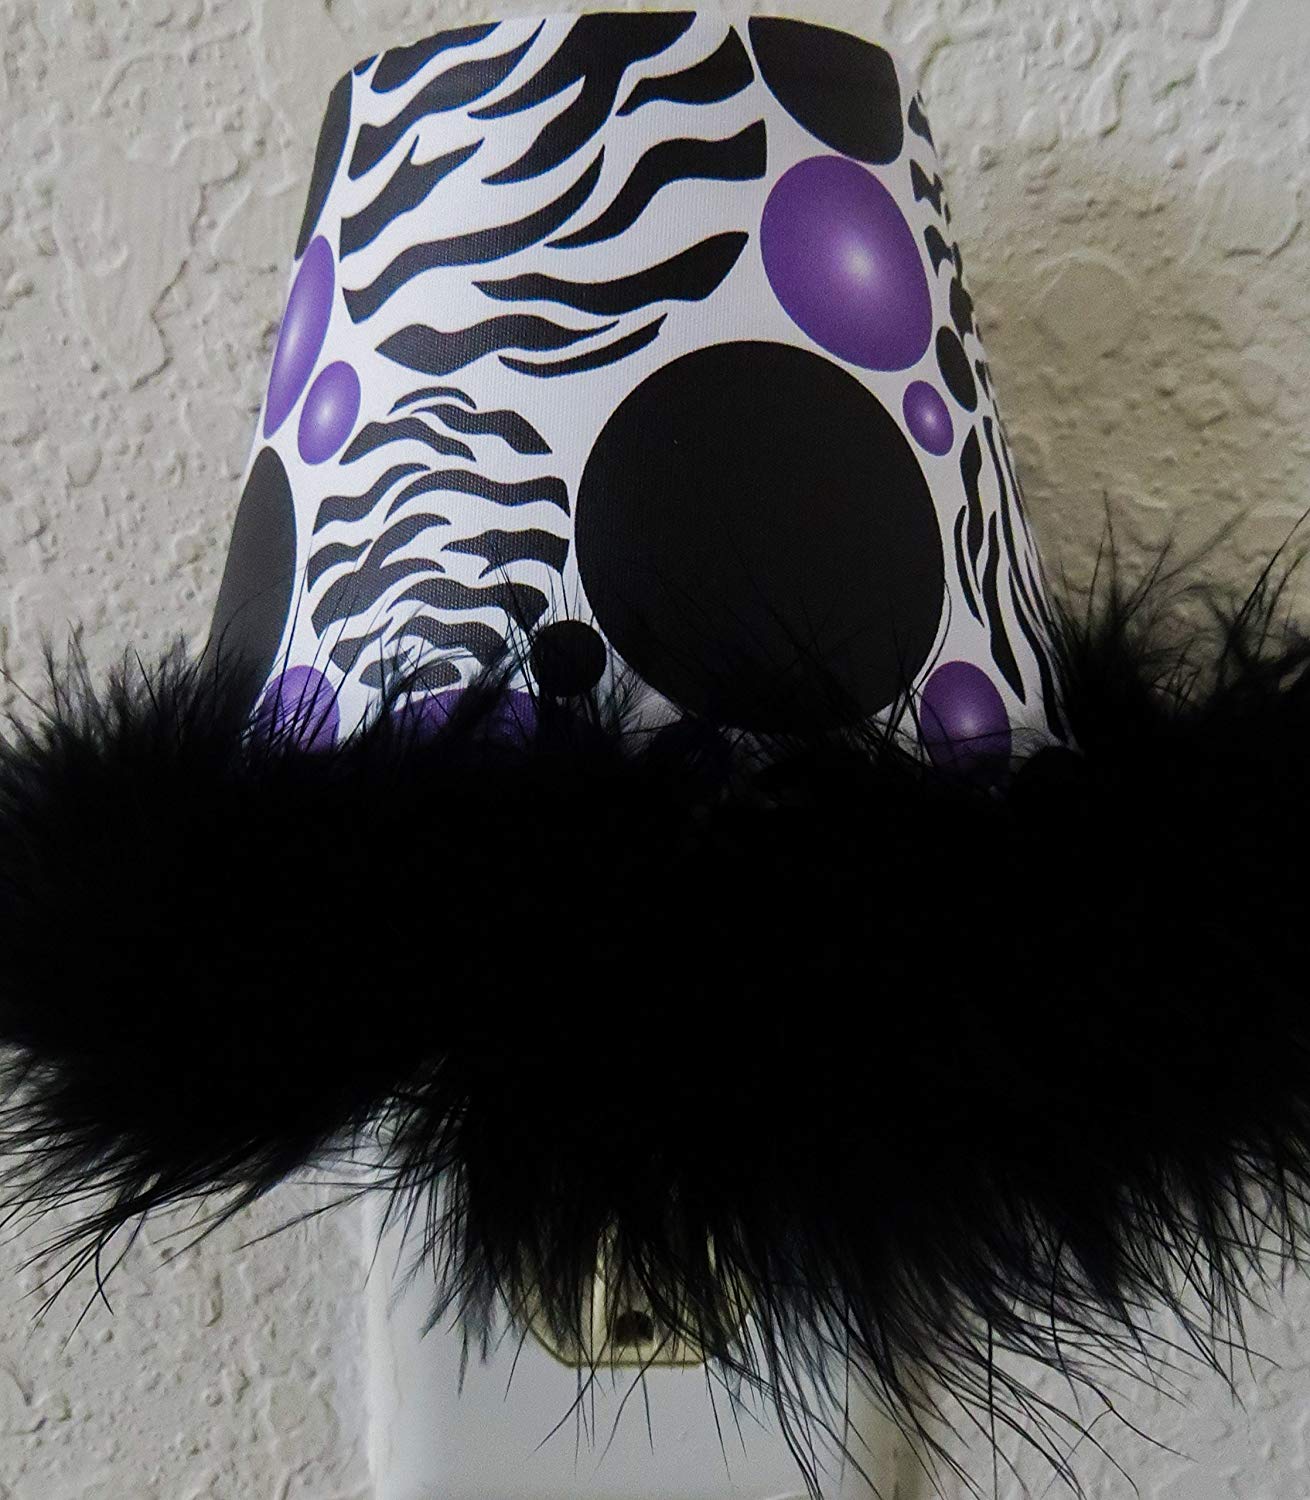 Zebra Print Dots Night Lights with Purple and Black Polka Dots and a Black Boa At Bottom